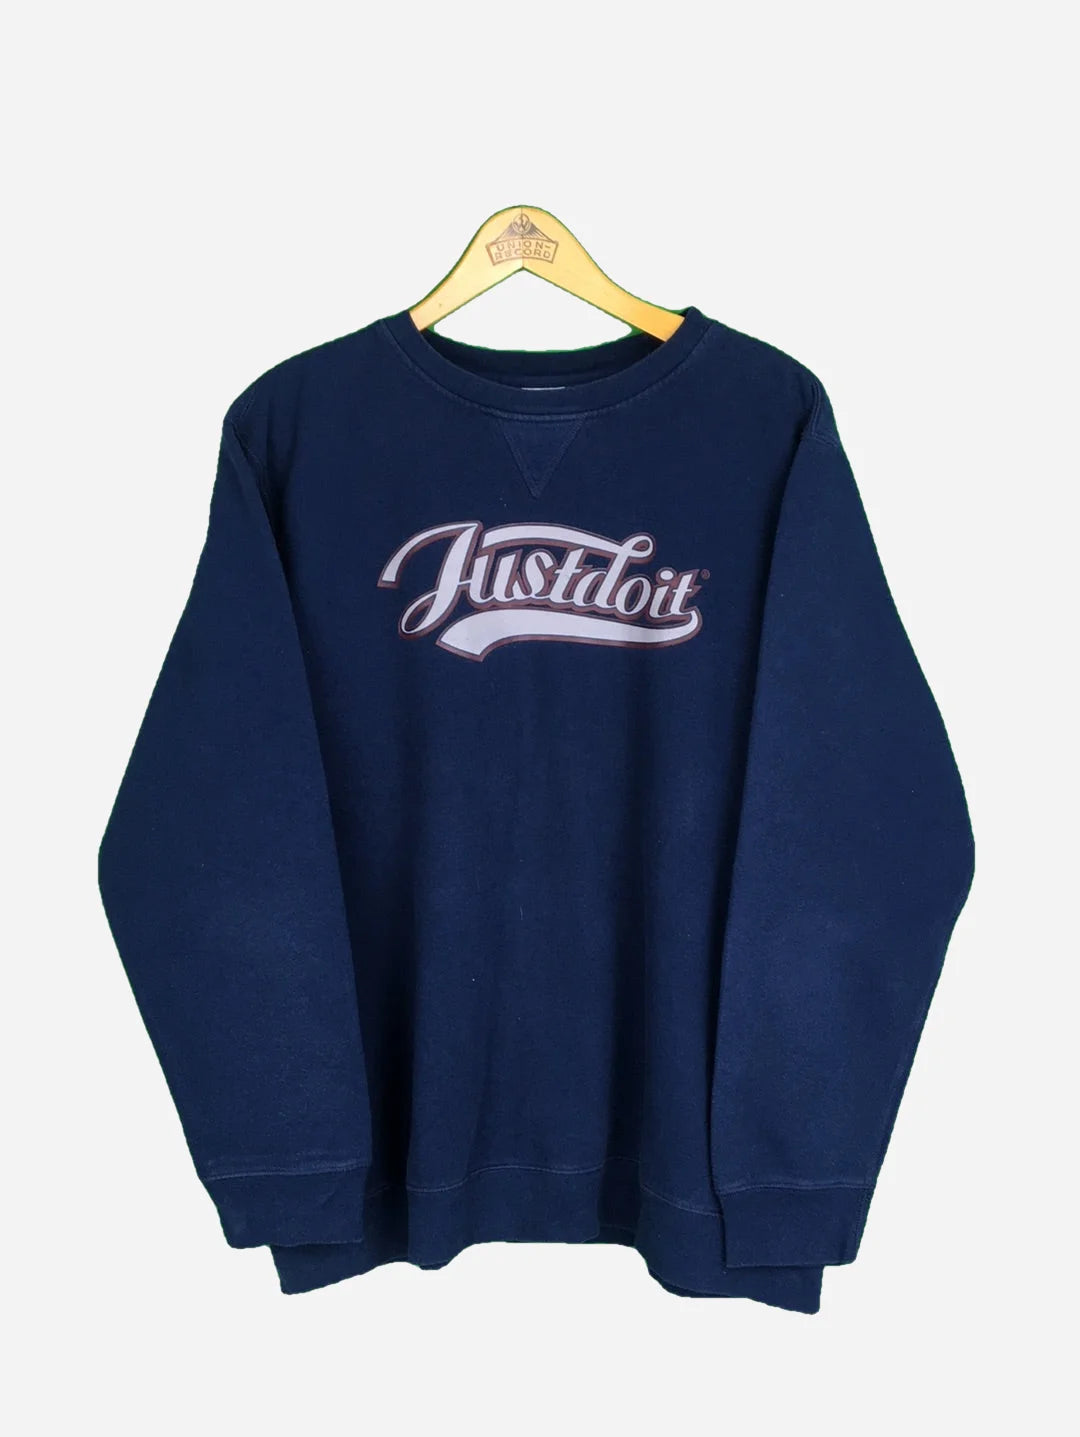 Nike „Just Do It“ Sweater (L)